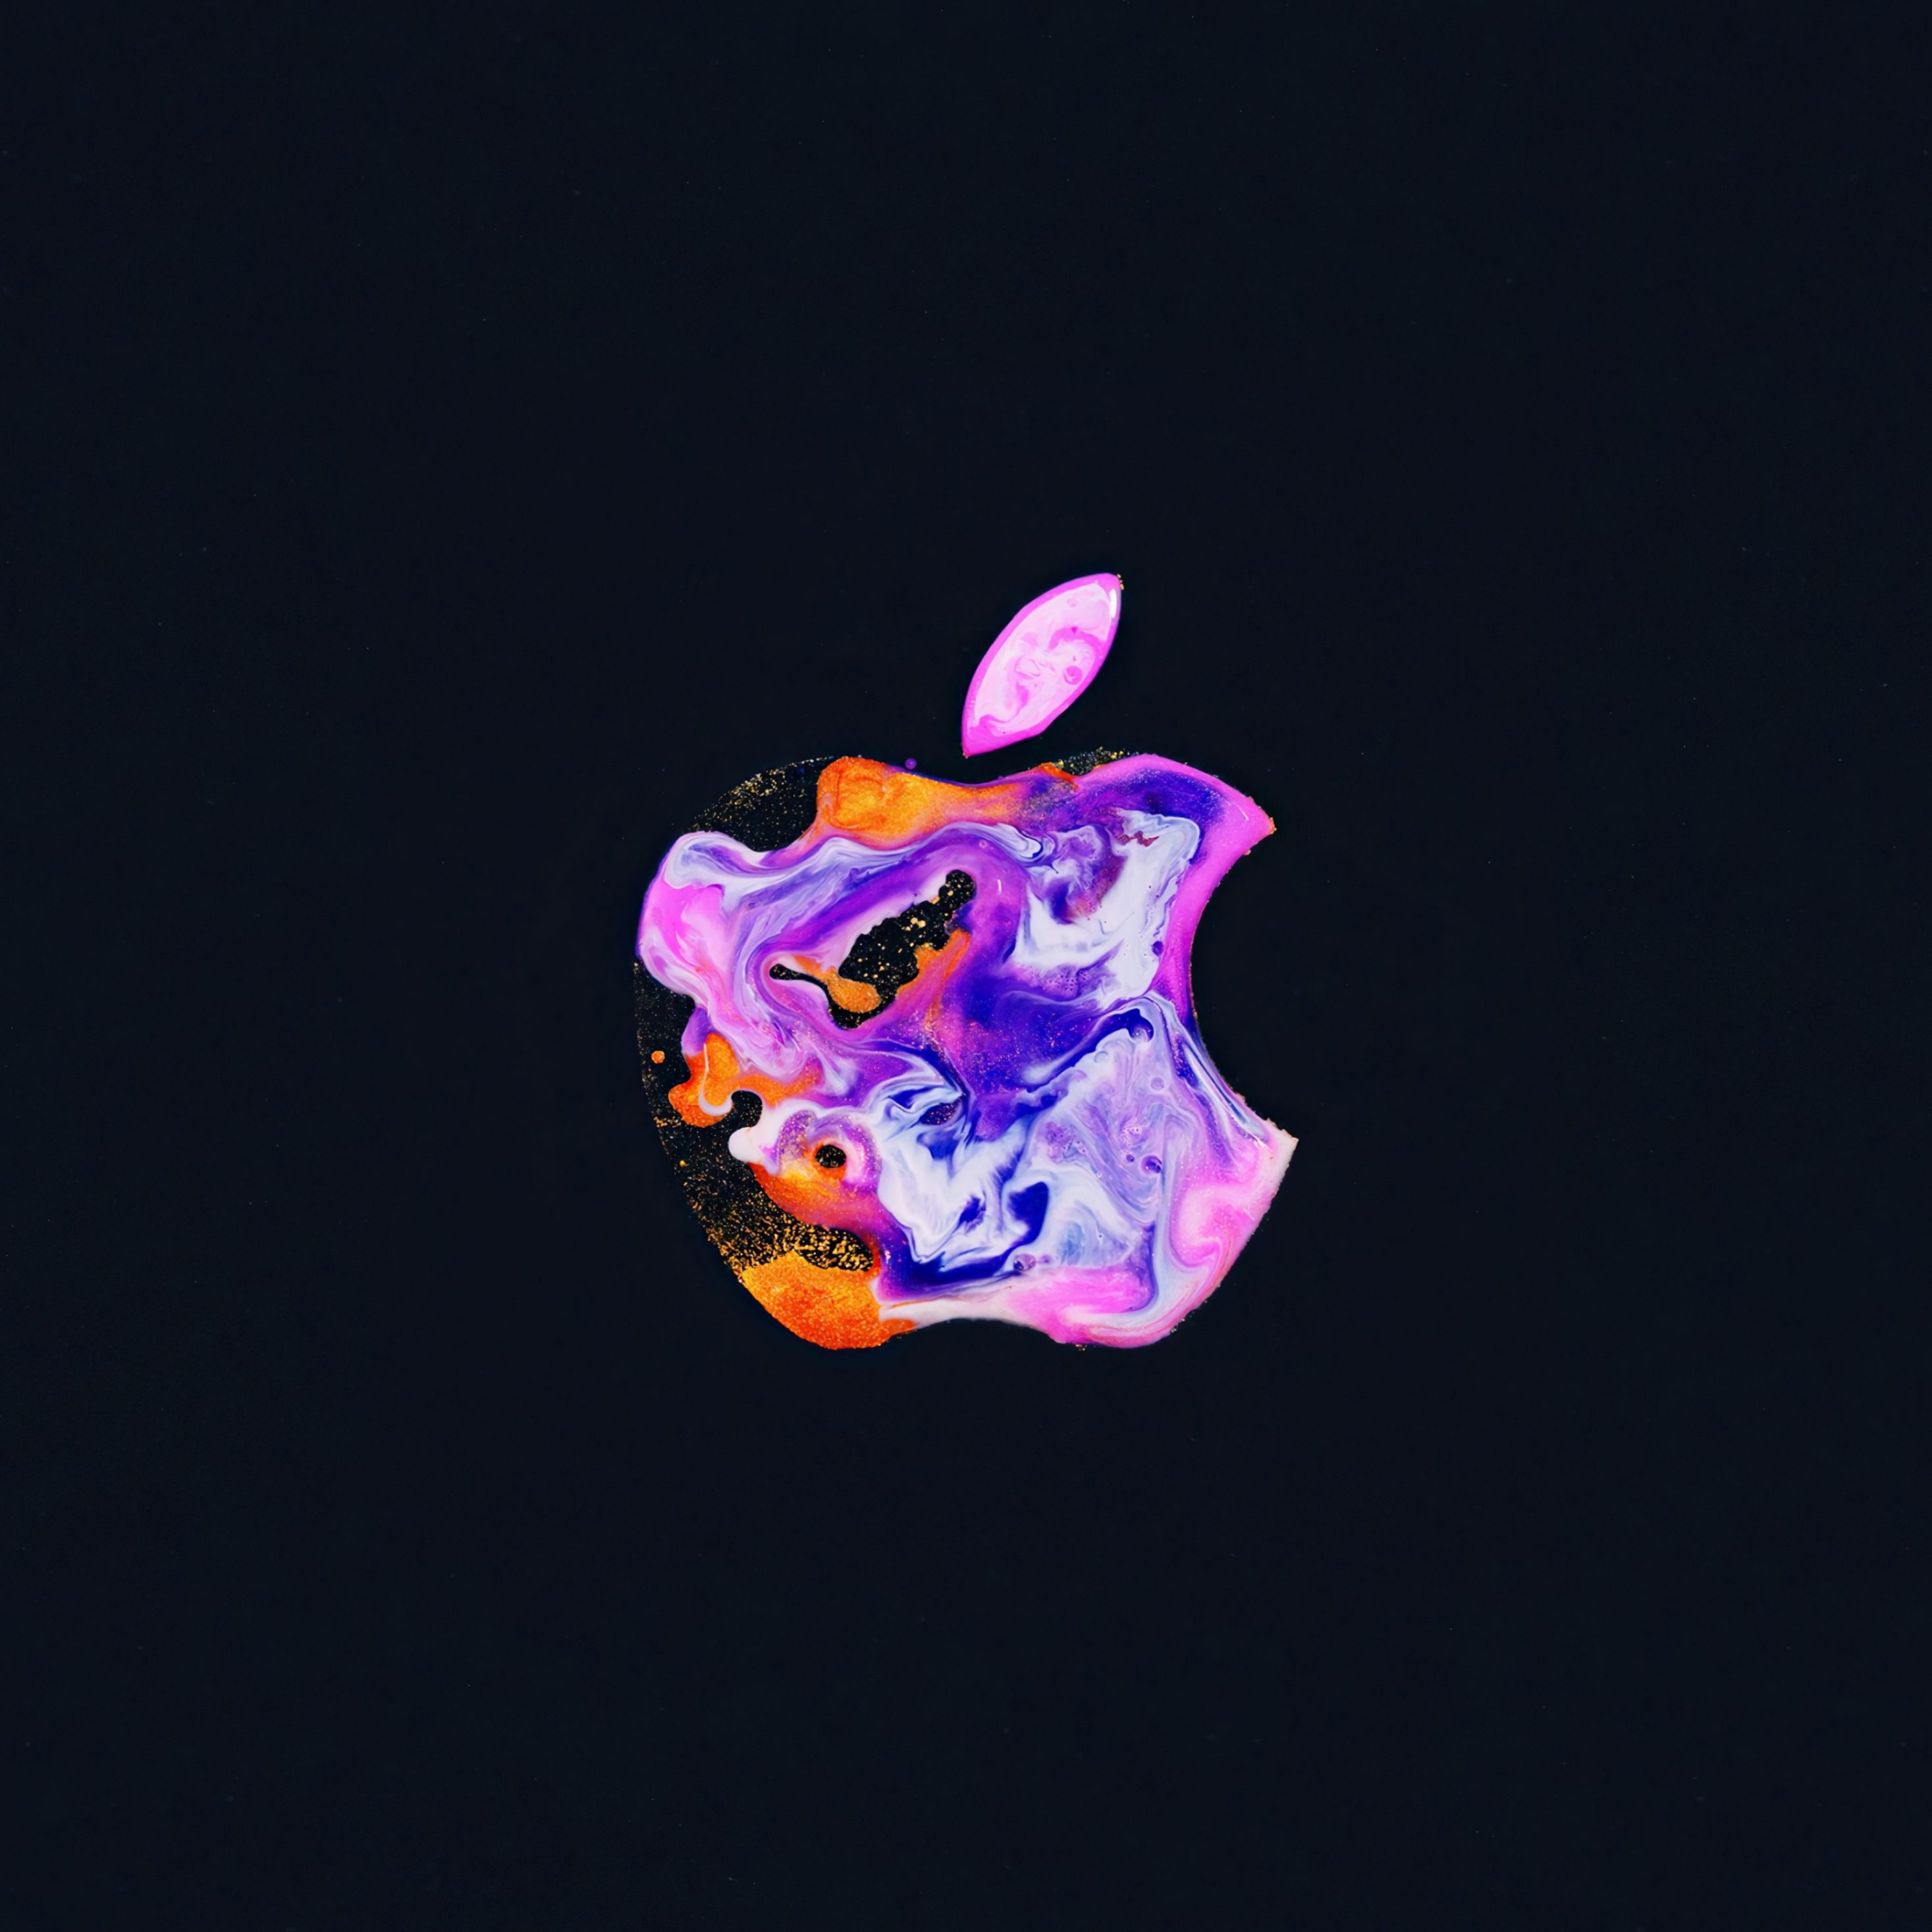 2934x2934 iOS iPad wallpaper 4k Apple Logo iPhone 12 Color Black Background iPad Wallpaper 2934x2934 pixels resolution